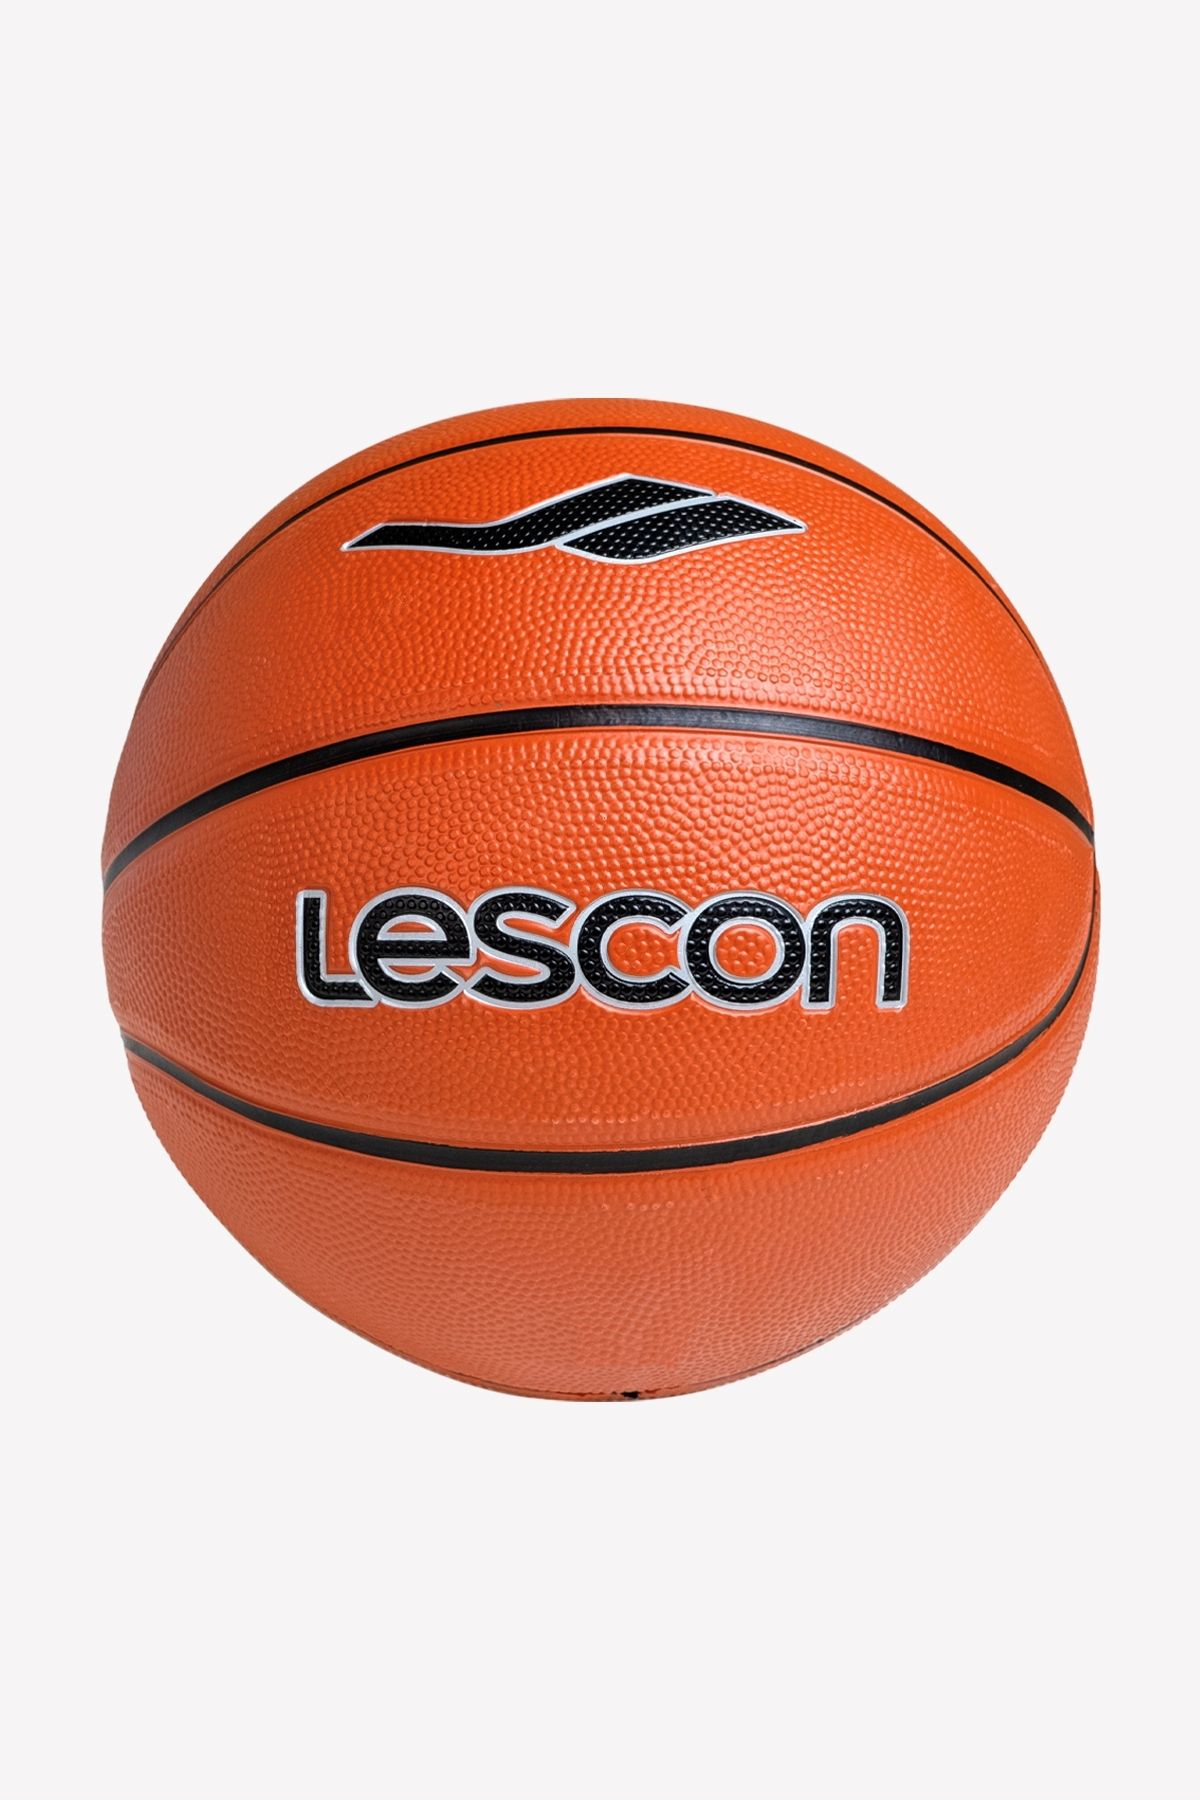 Lescon Training Basketbol Topu 7 Standart La-3512